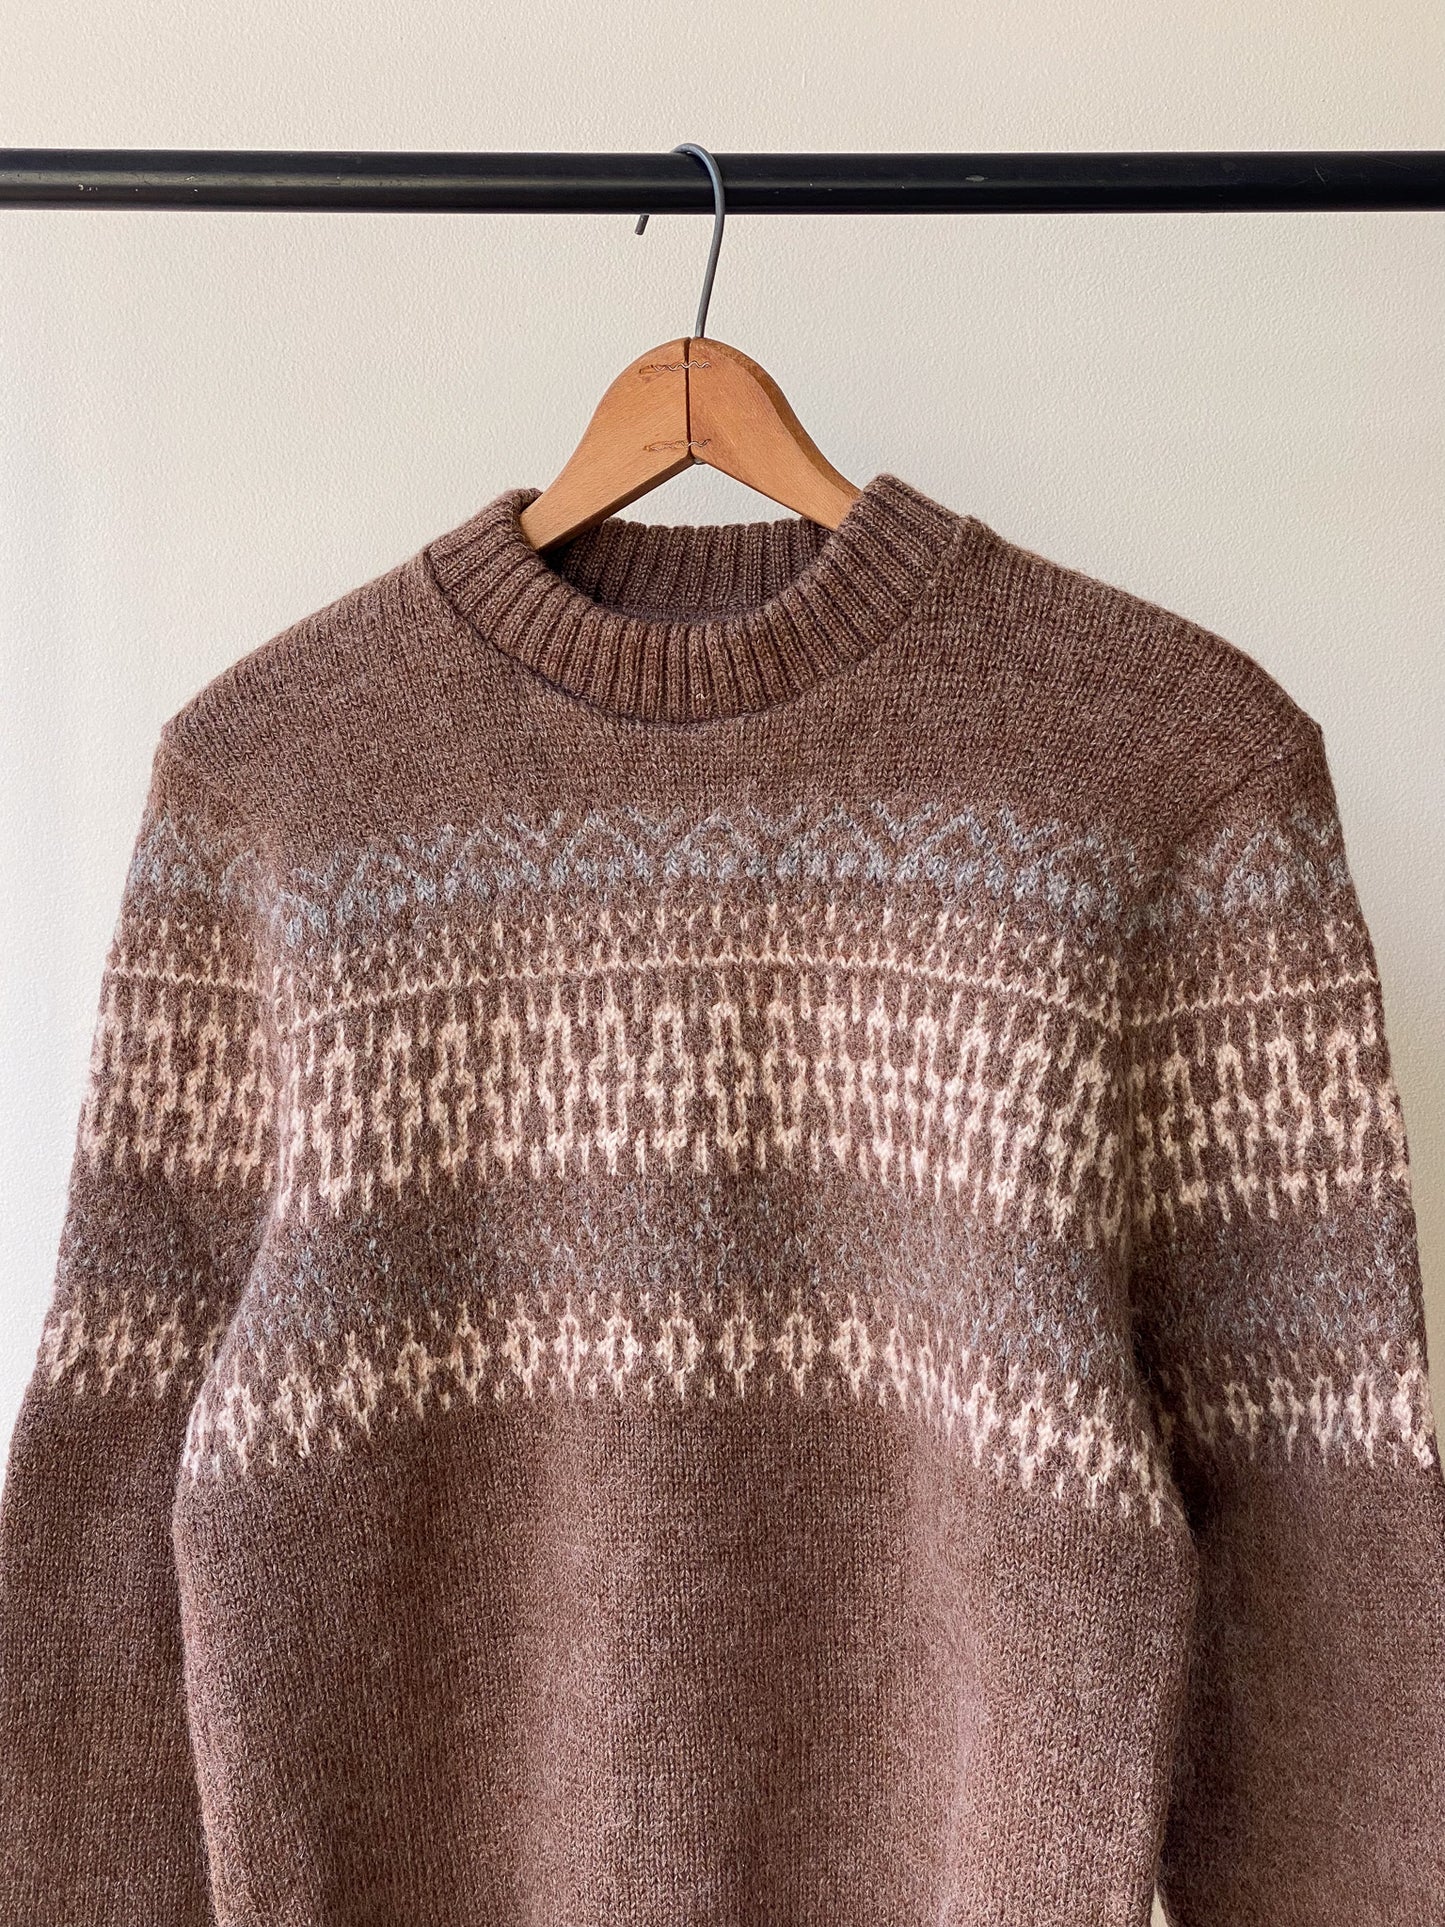 Handmade Geometric Knit Wool Crewneck Sweater—[S/M]